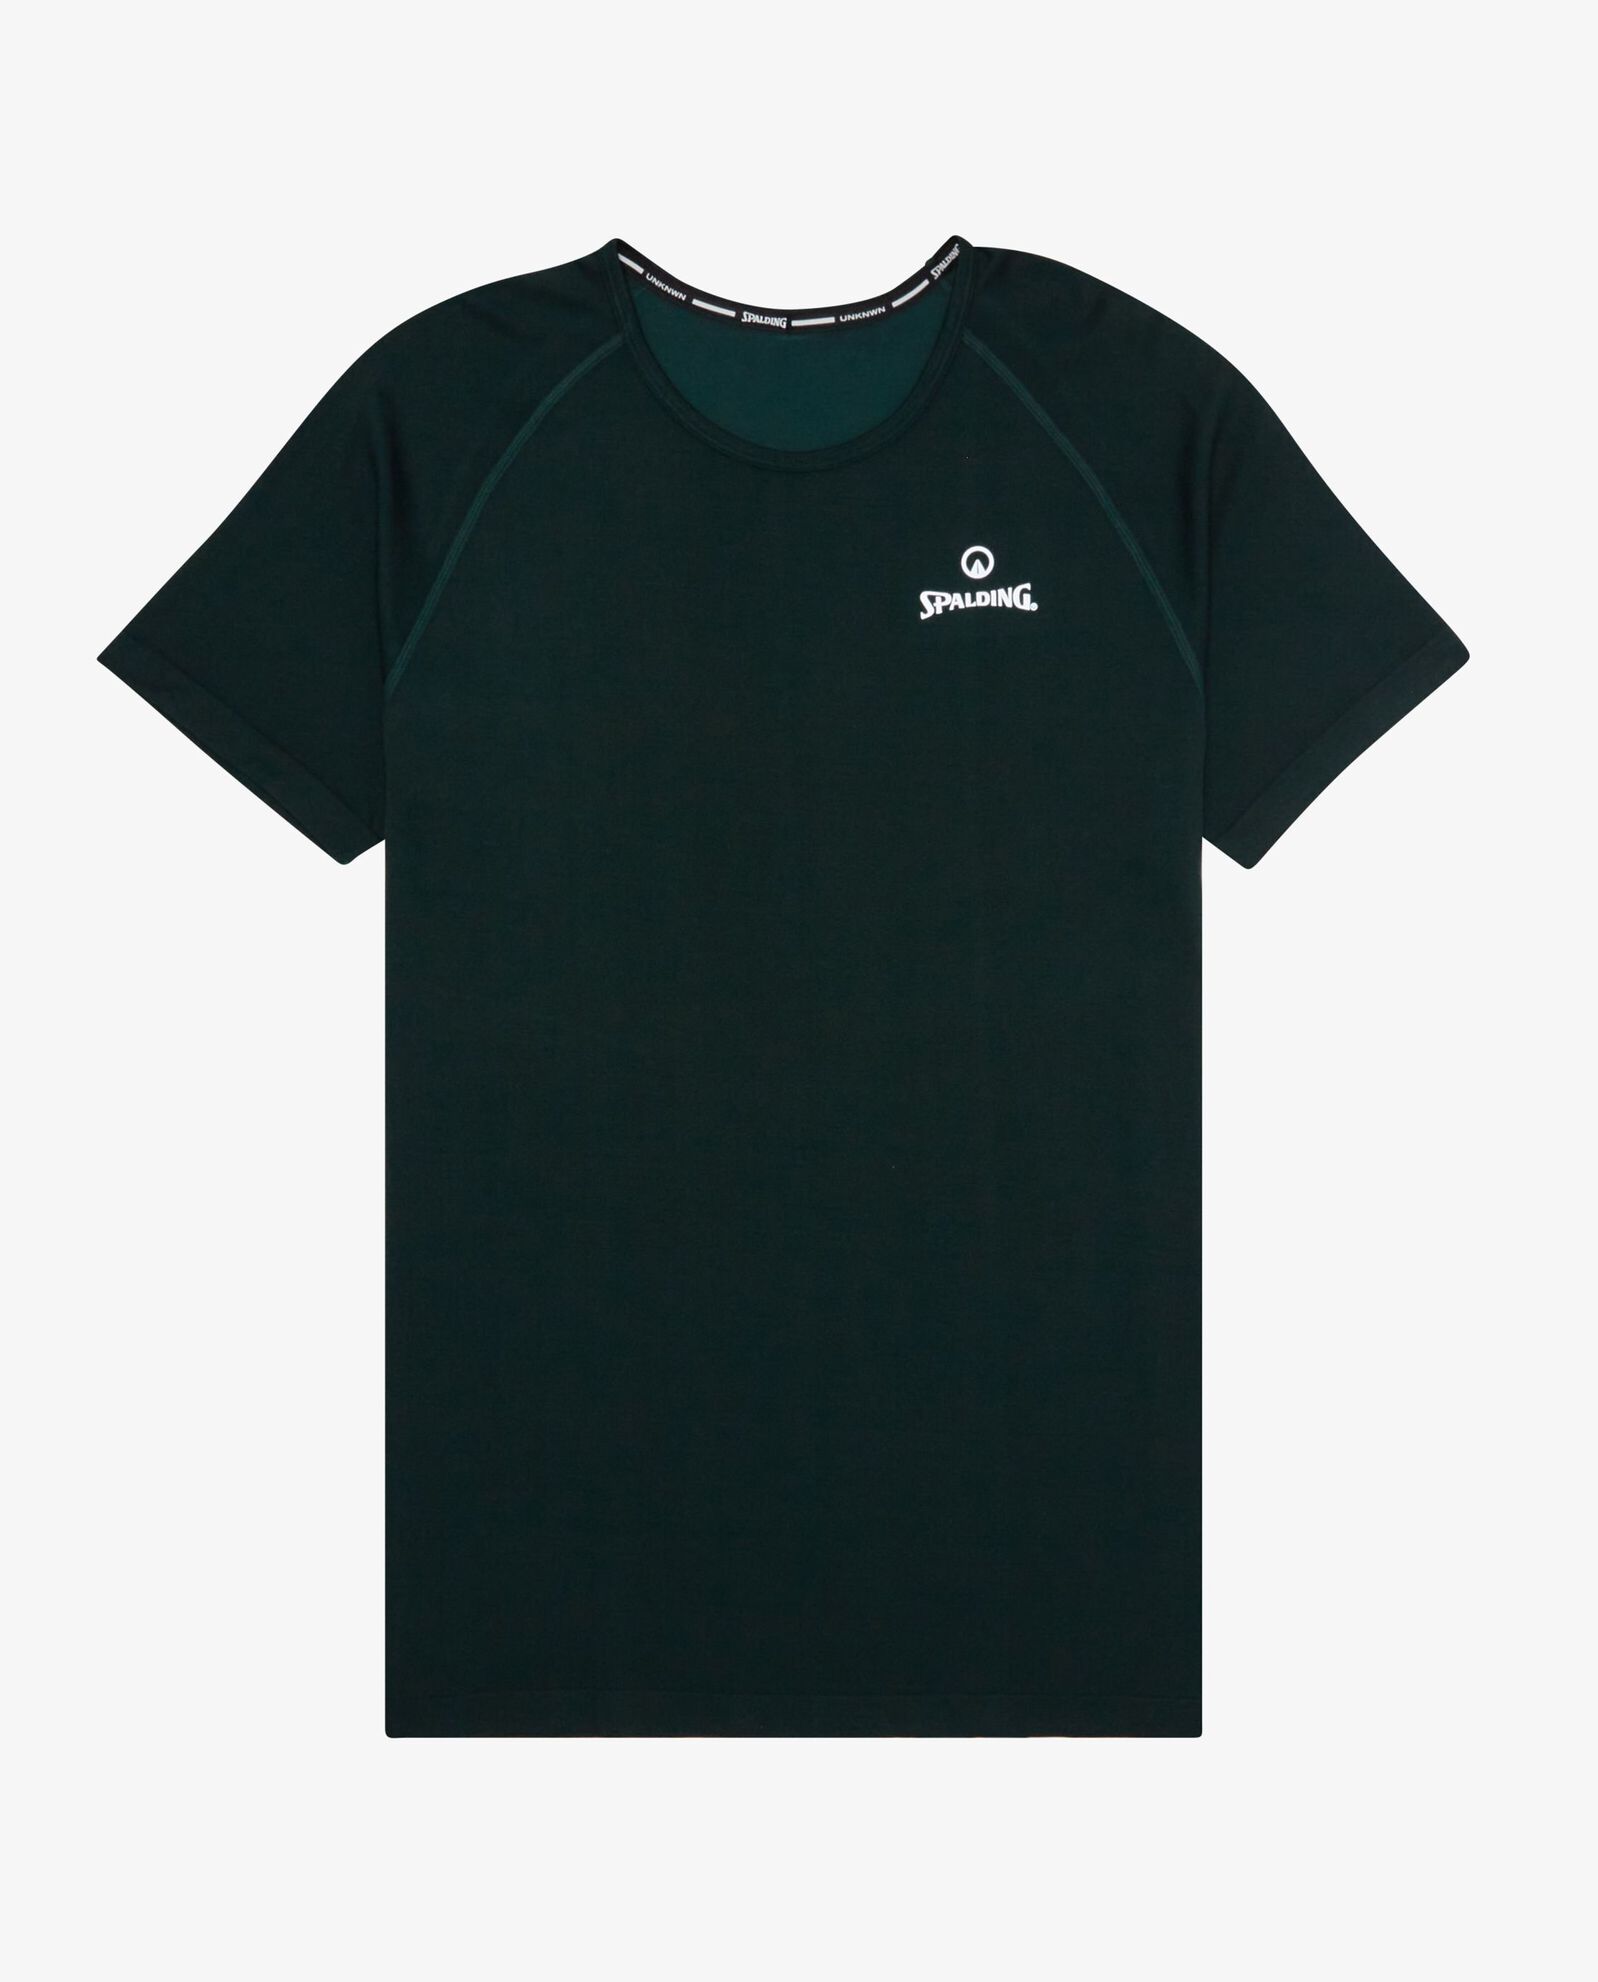 Spalding x UNKNWN Short Sleeve Sport Shirt Pine Grove Medium 